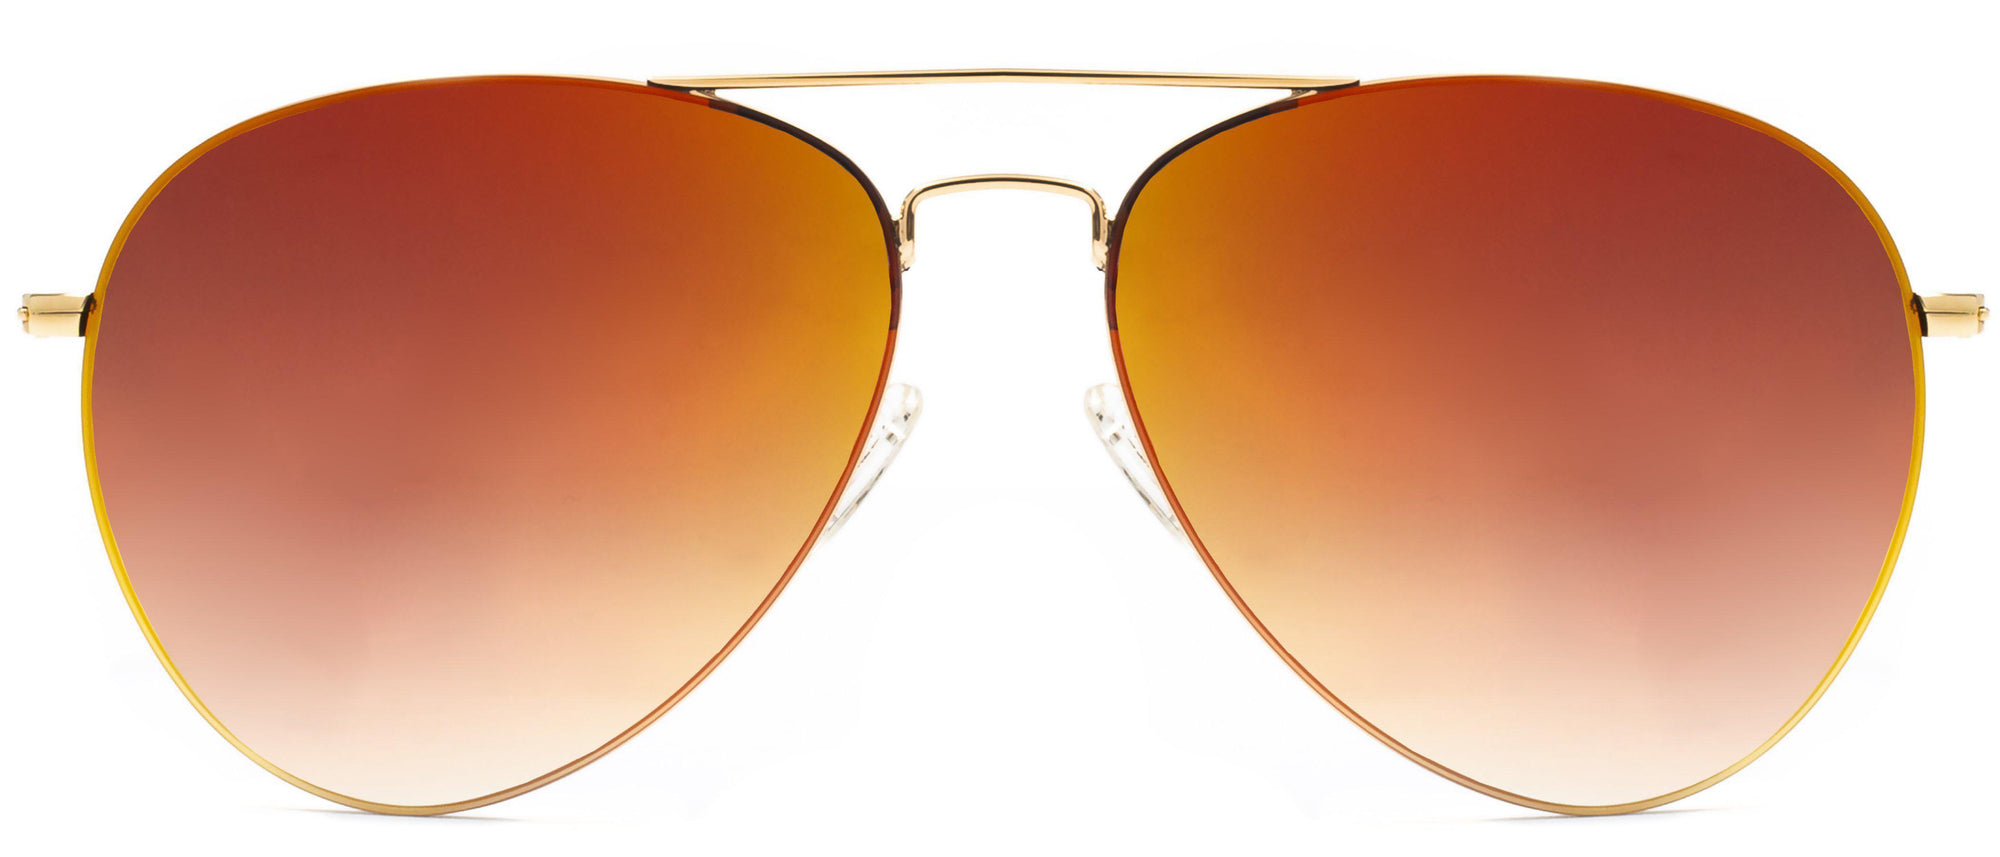 Northbridge Elite - Sunglasses NYS Collection Eyewear Gold/Red Mirrored